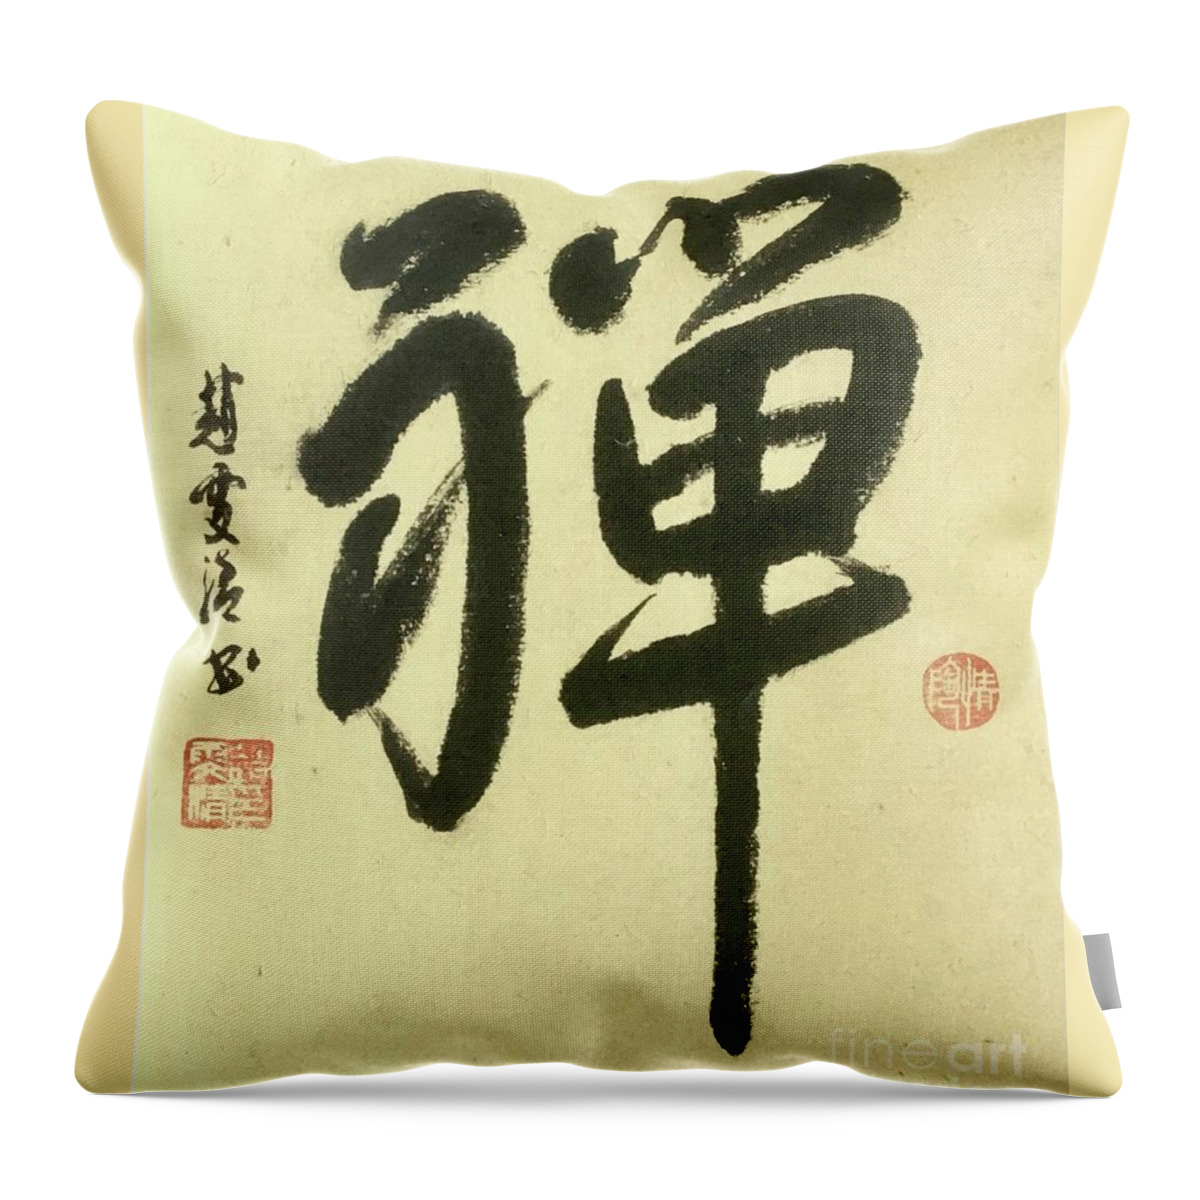 Zen Throw Pillow featuring the painting Calligraphy - 41 Zen by Carmen Lam